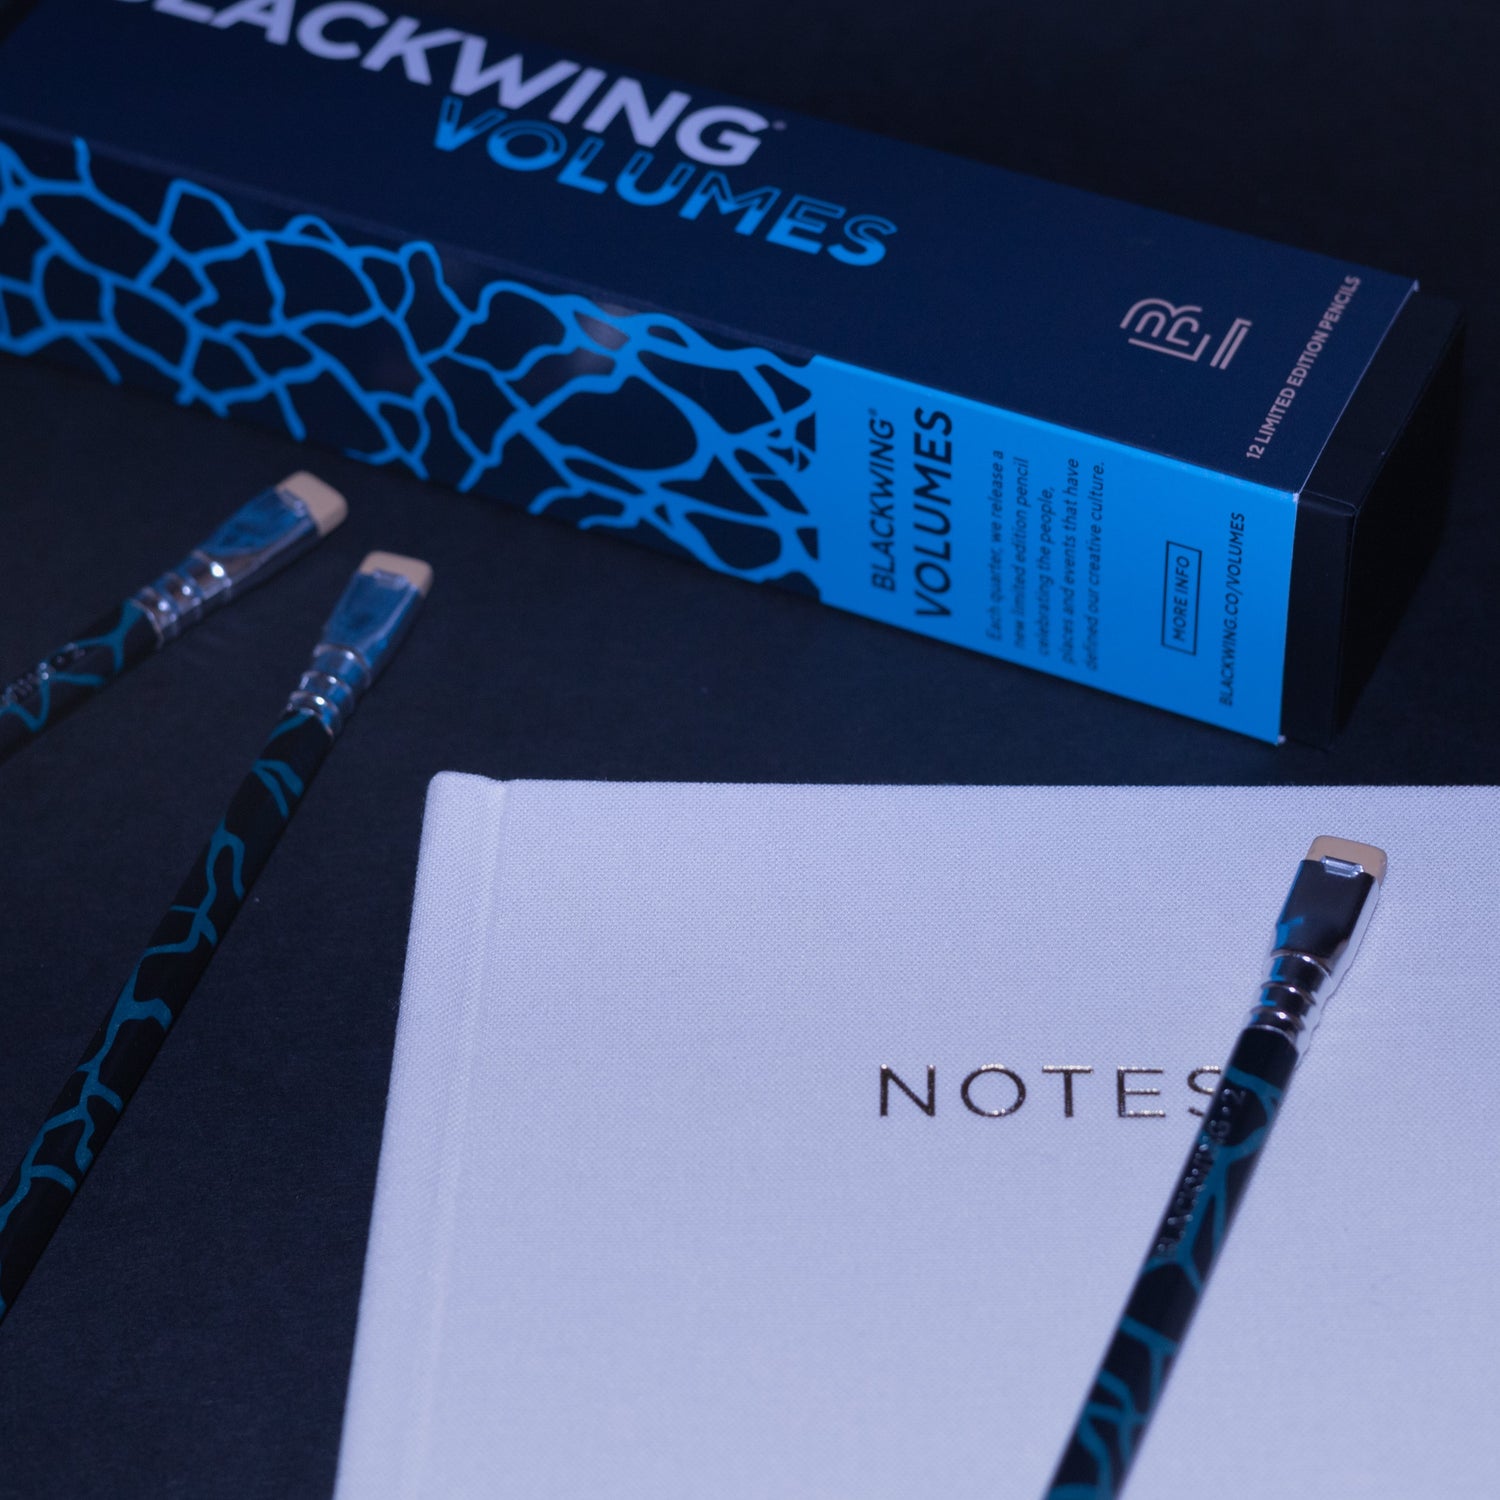 Pencil Blackwing, Blackwing. Black shaft